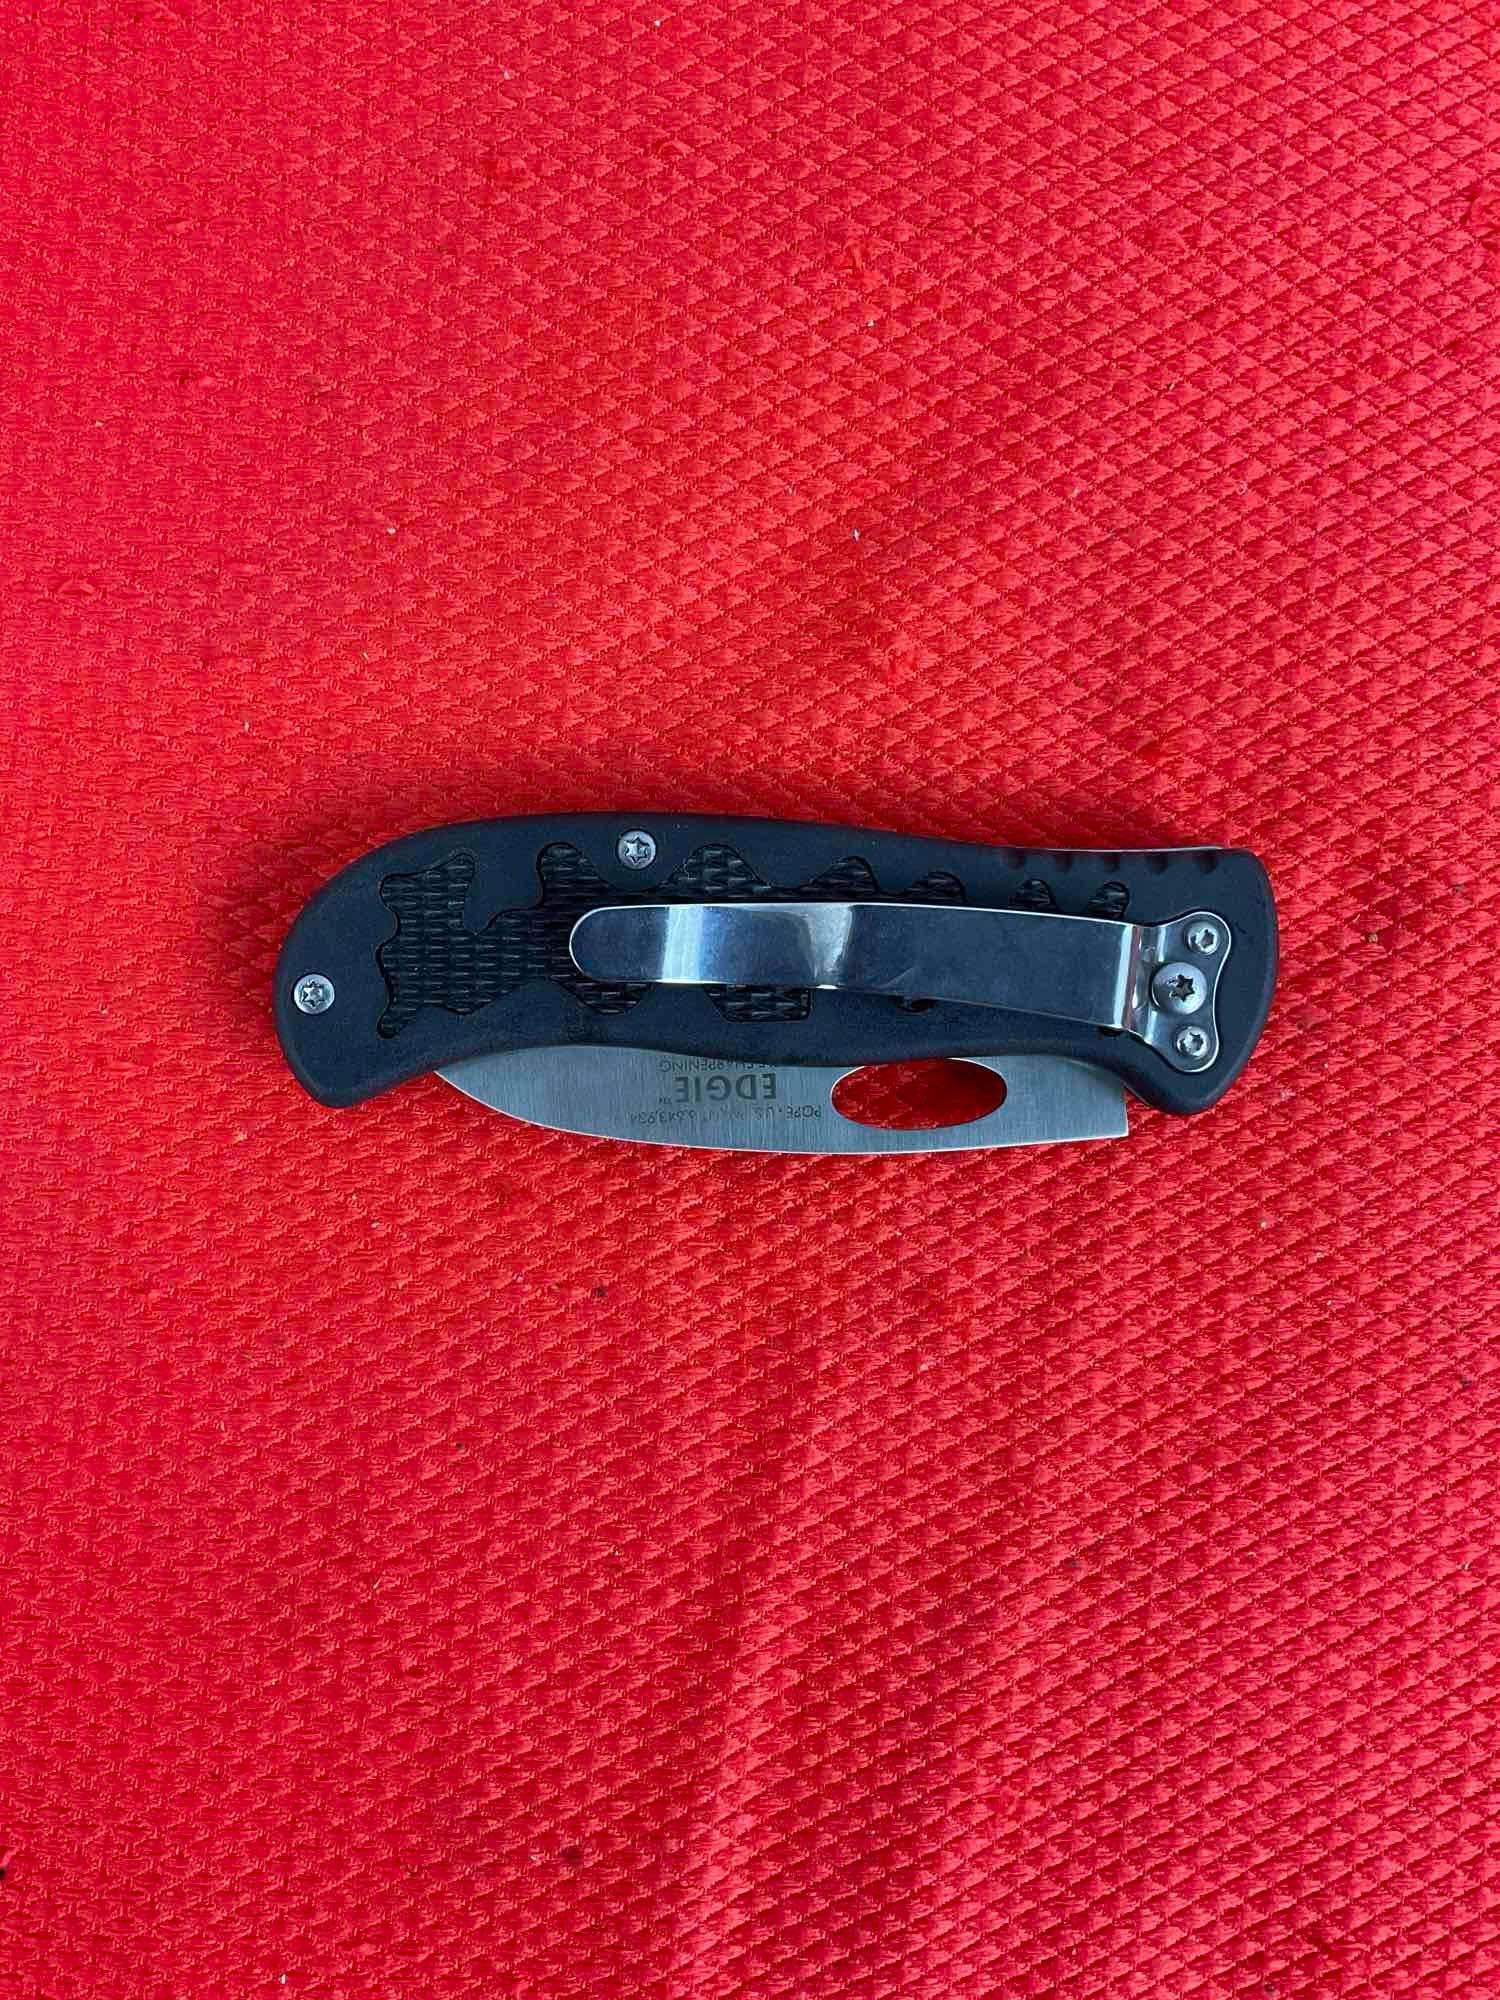 CRKT Edgie 3" 420J2 Steel Self-Sharpening Slip Joint Folding Knife Model 6442. NIB. See pics.